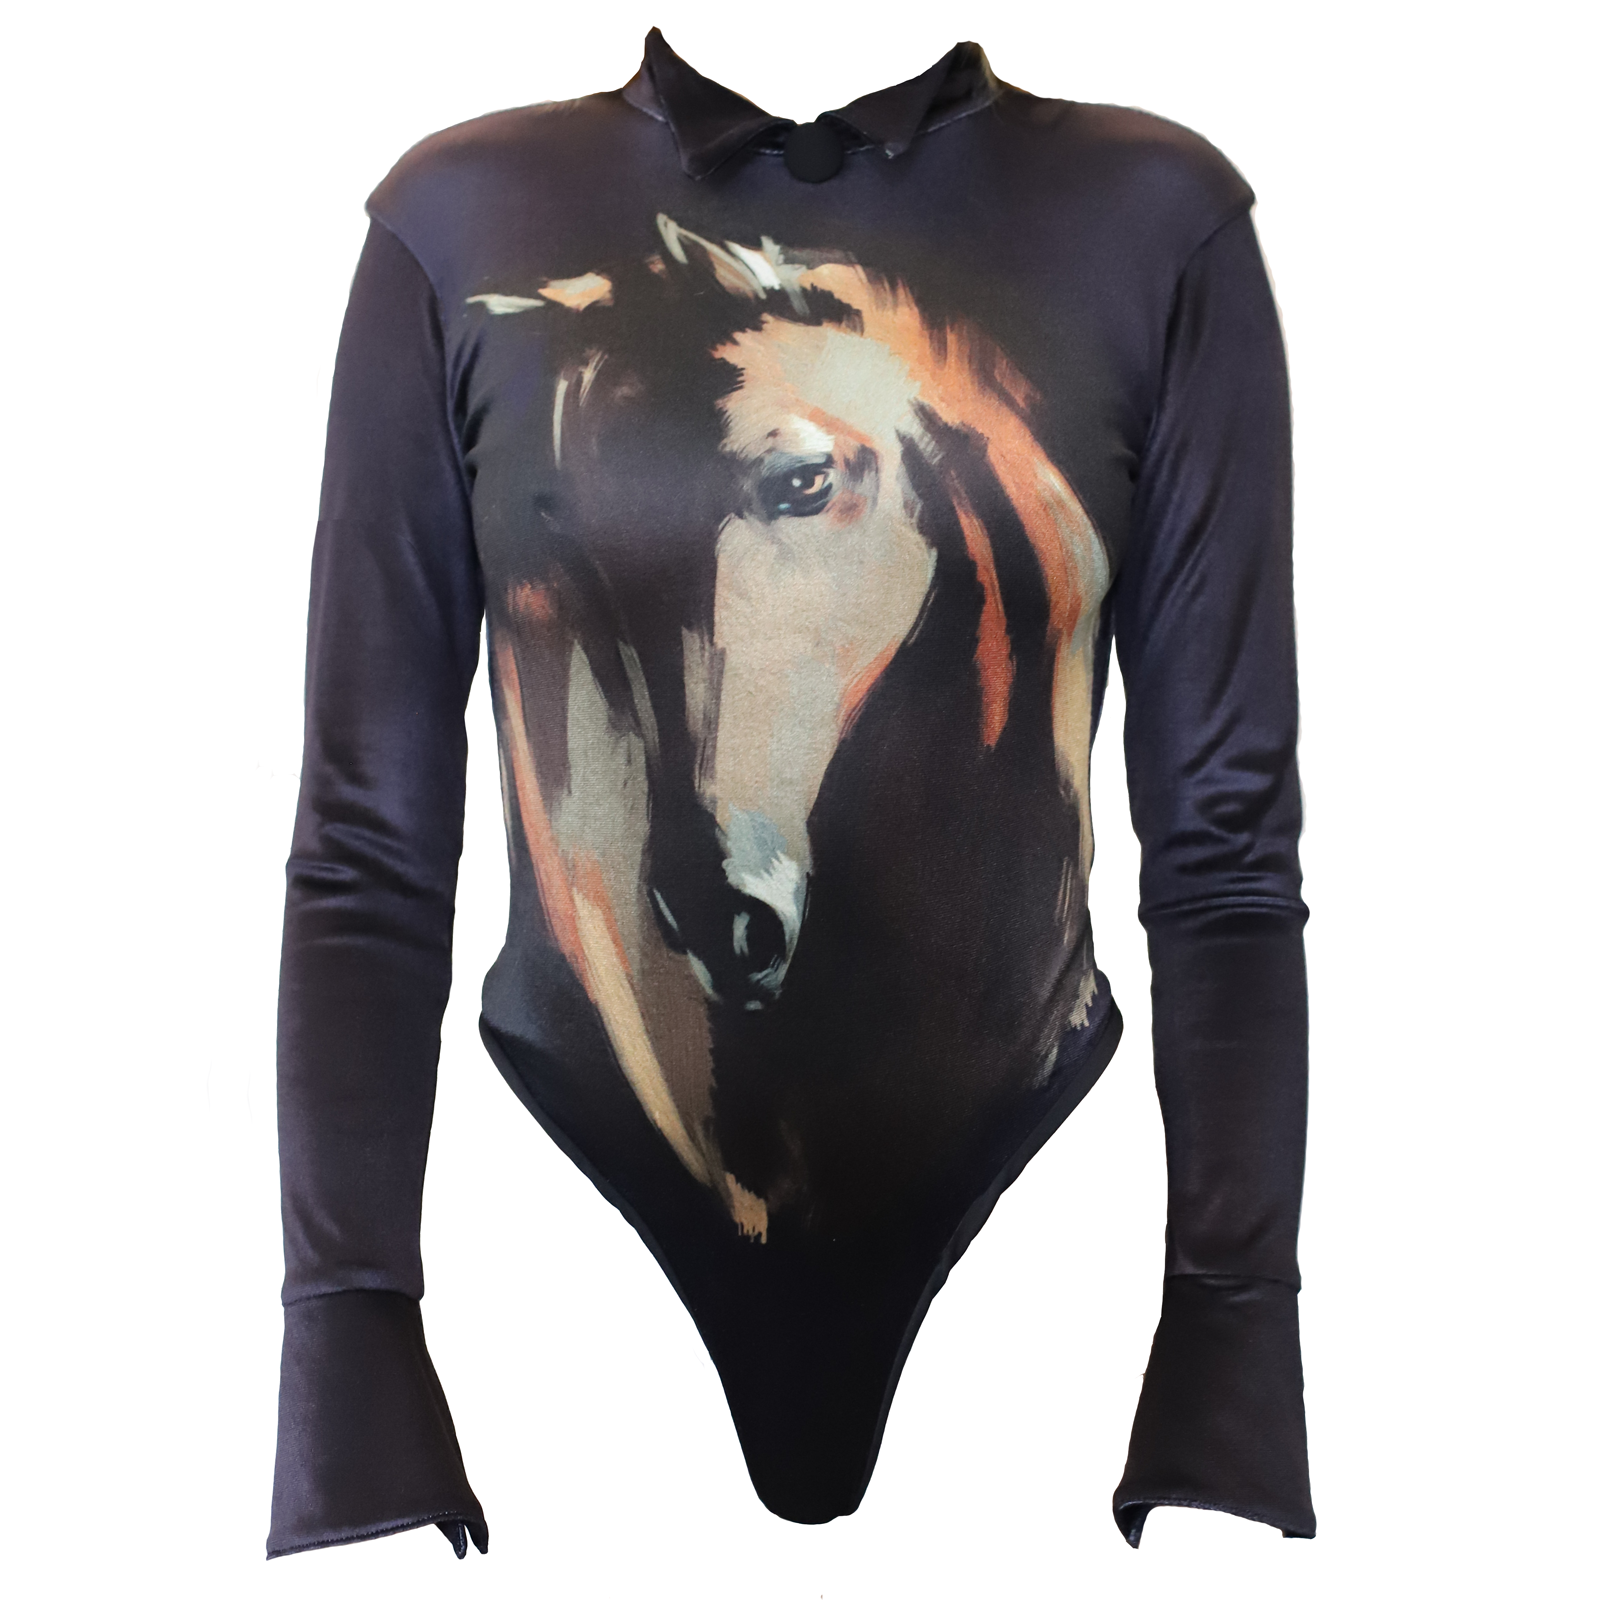 Exclusive wild horse velvet bodysuit by Noblesse Oblige